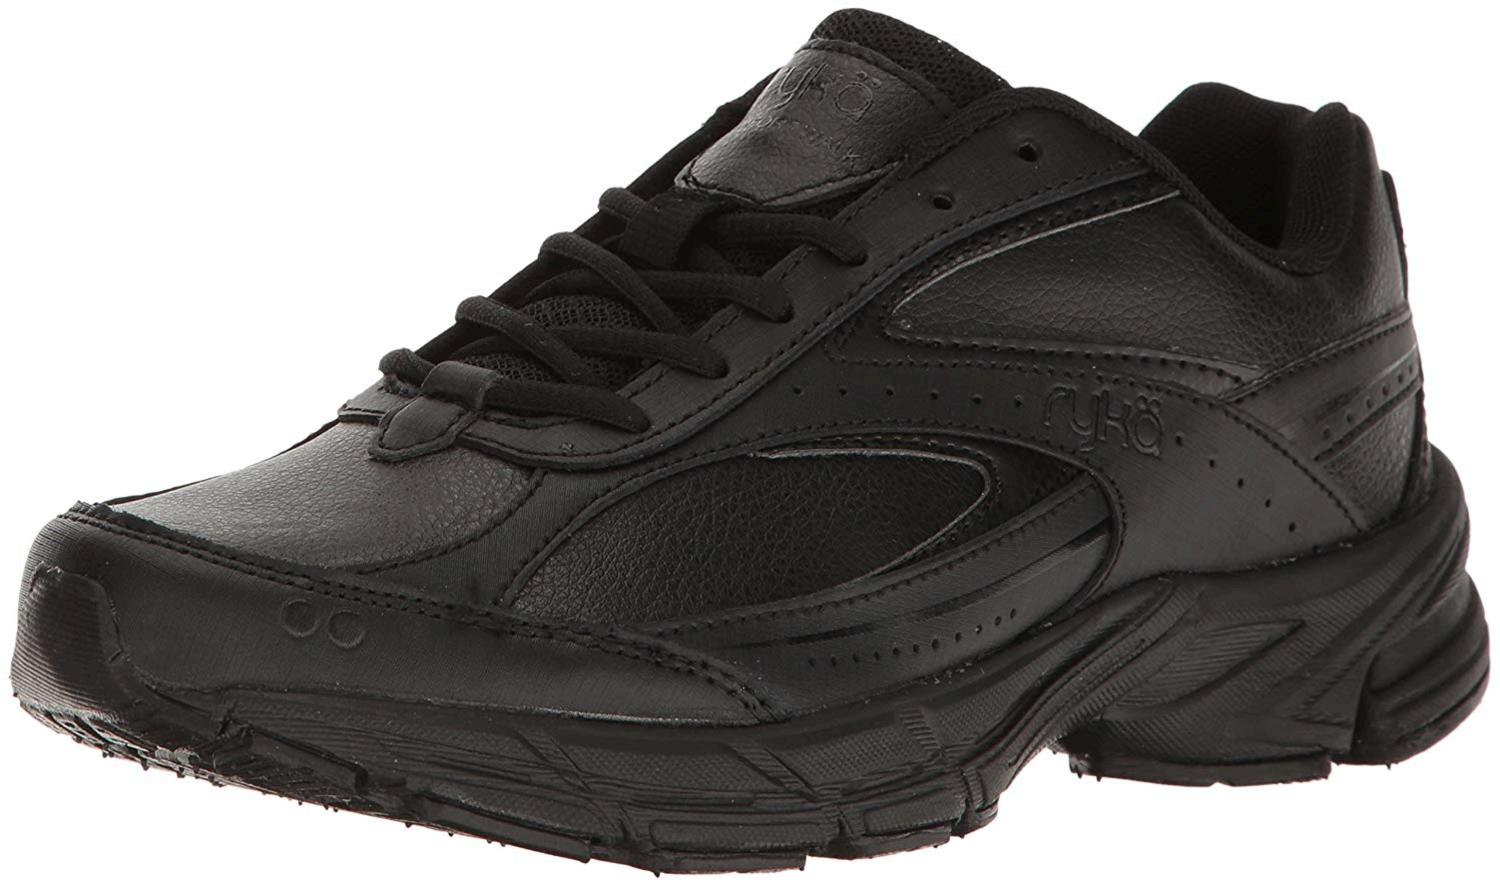 Ryka Women's Comfort Walking Shoe, Black, Size 7.0 YWef | eBay